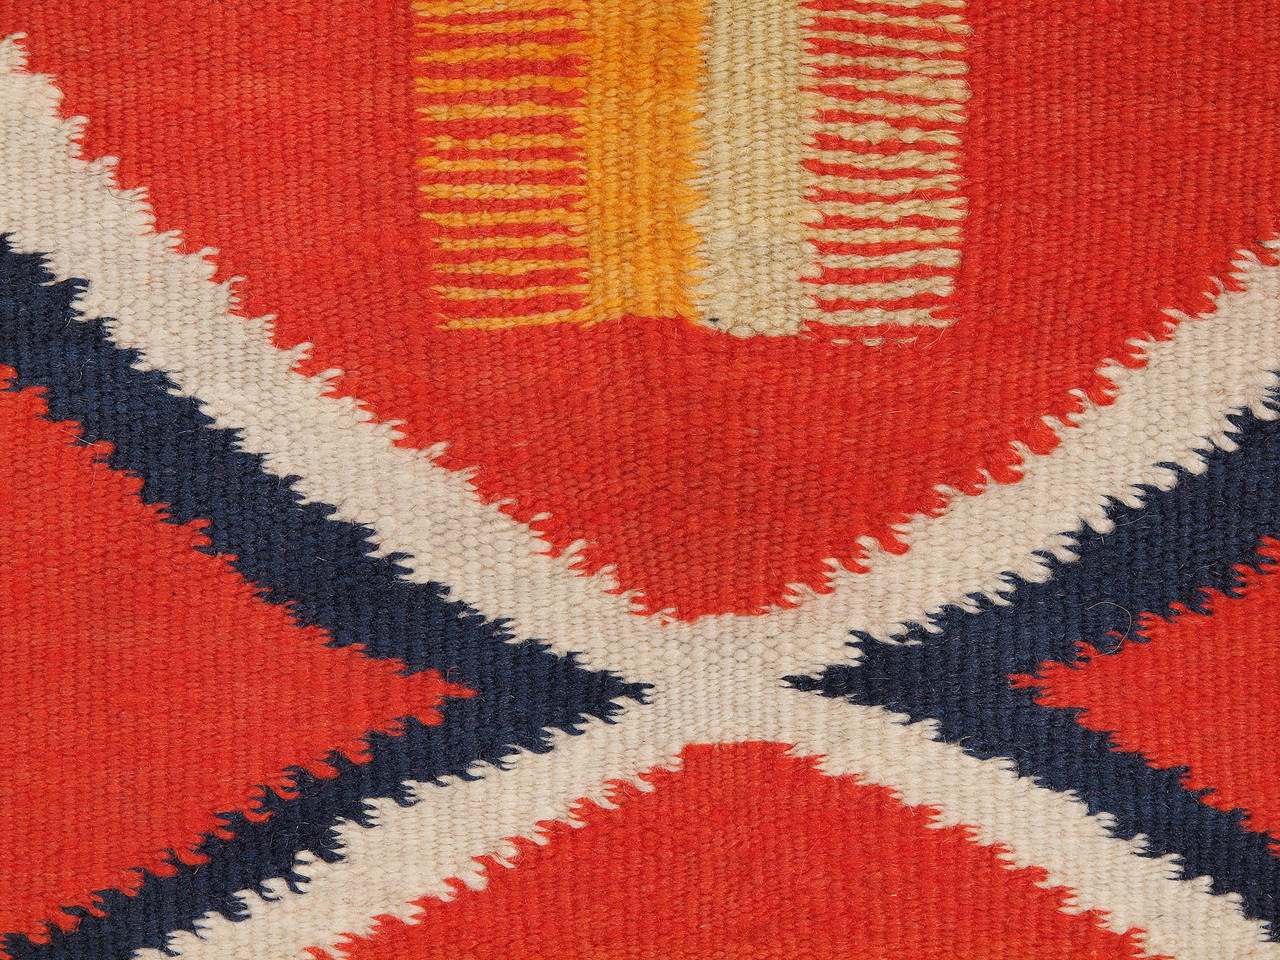 American Late Classic Period Navajo Wearing Blanket, circa 1875